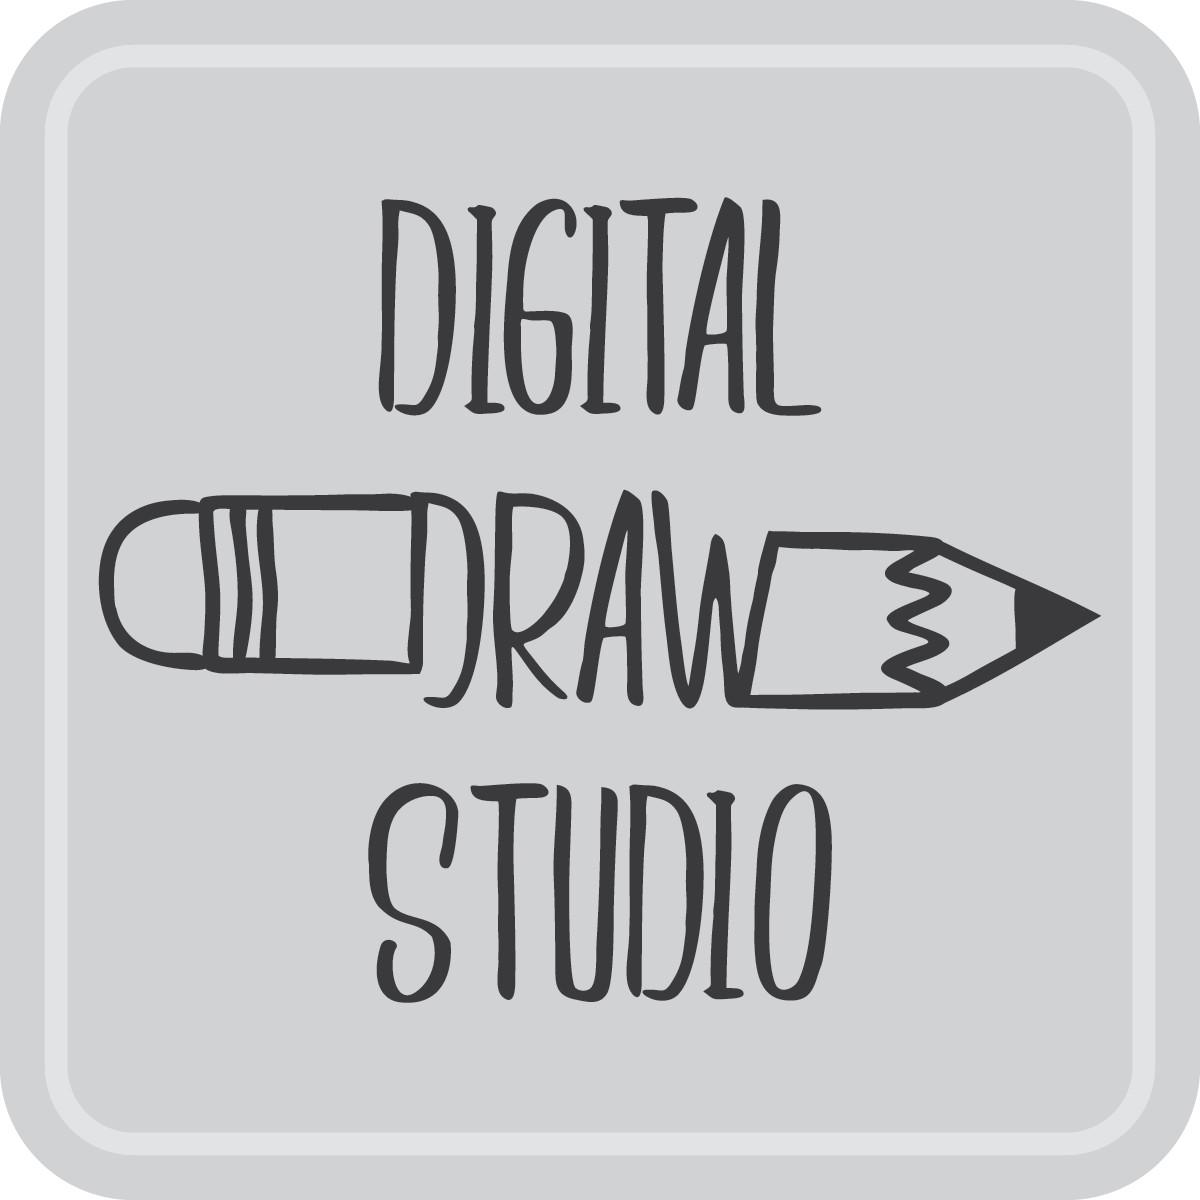 Digital_Draw_Studio